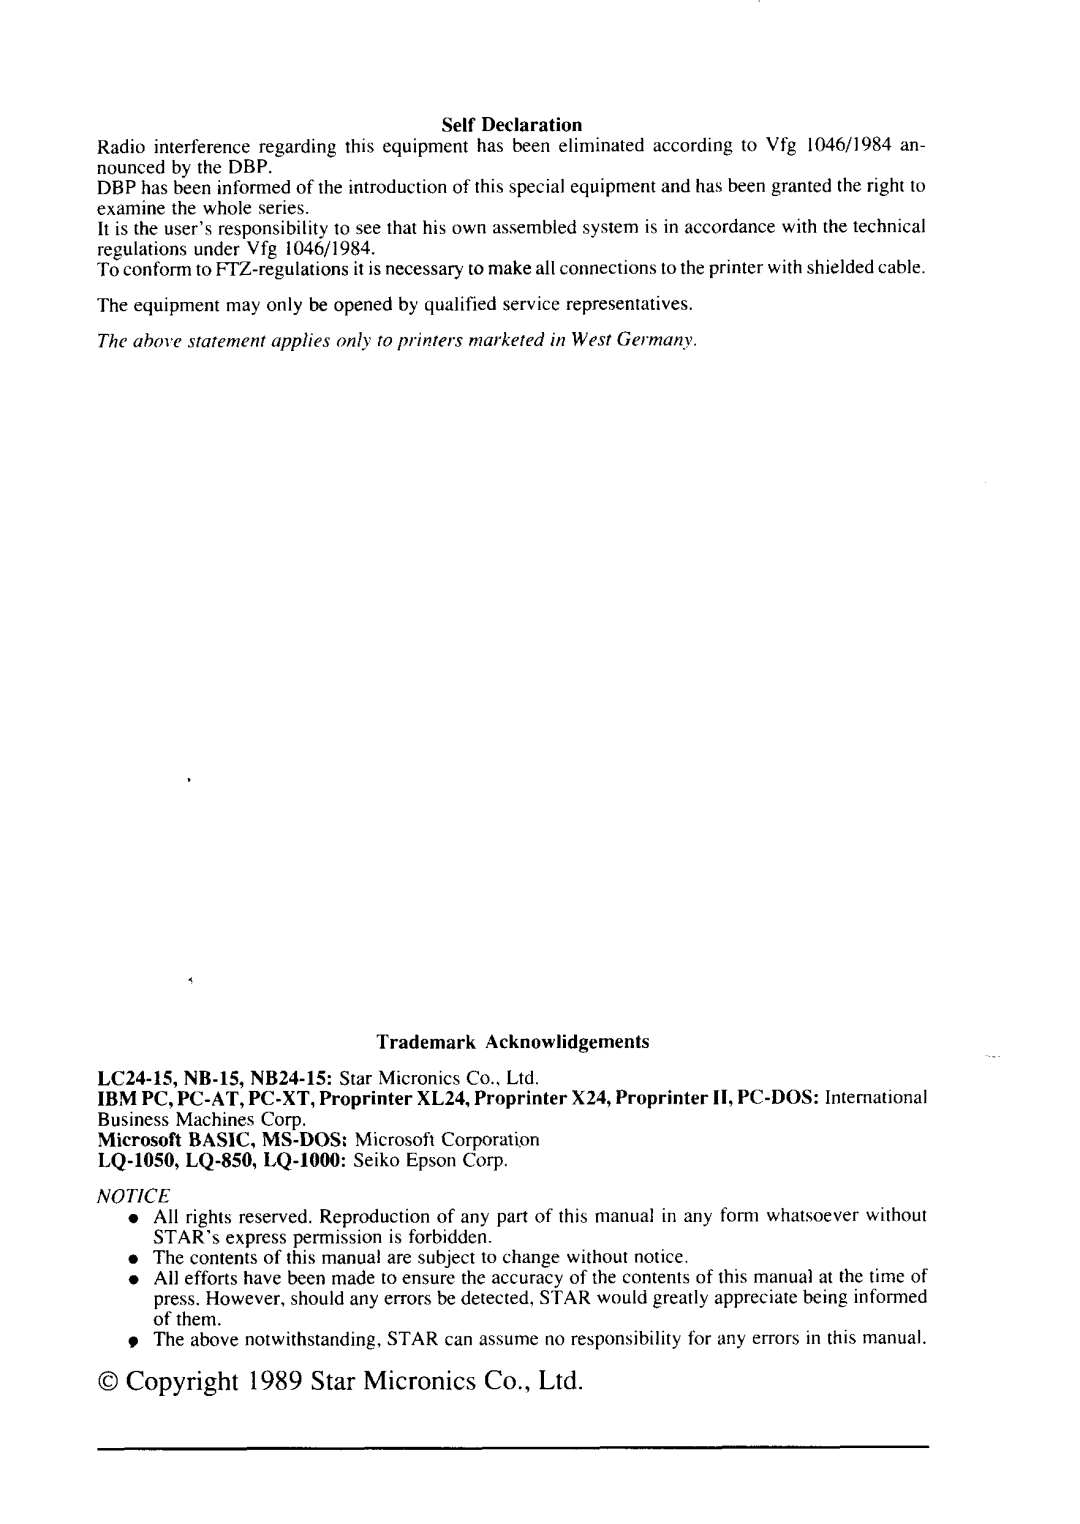 Star Micronics LC24-15 Self Declaration, Trademark Acknowlidgements, Microsoft BASIC, MS-DOS Microsoft Corporation 